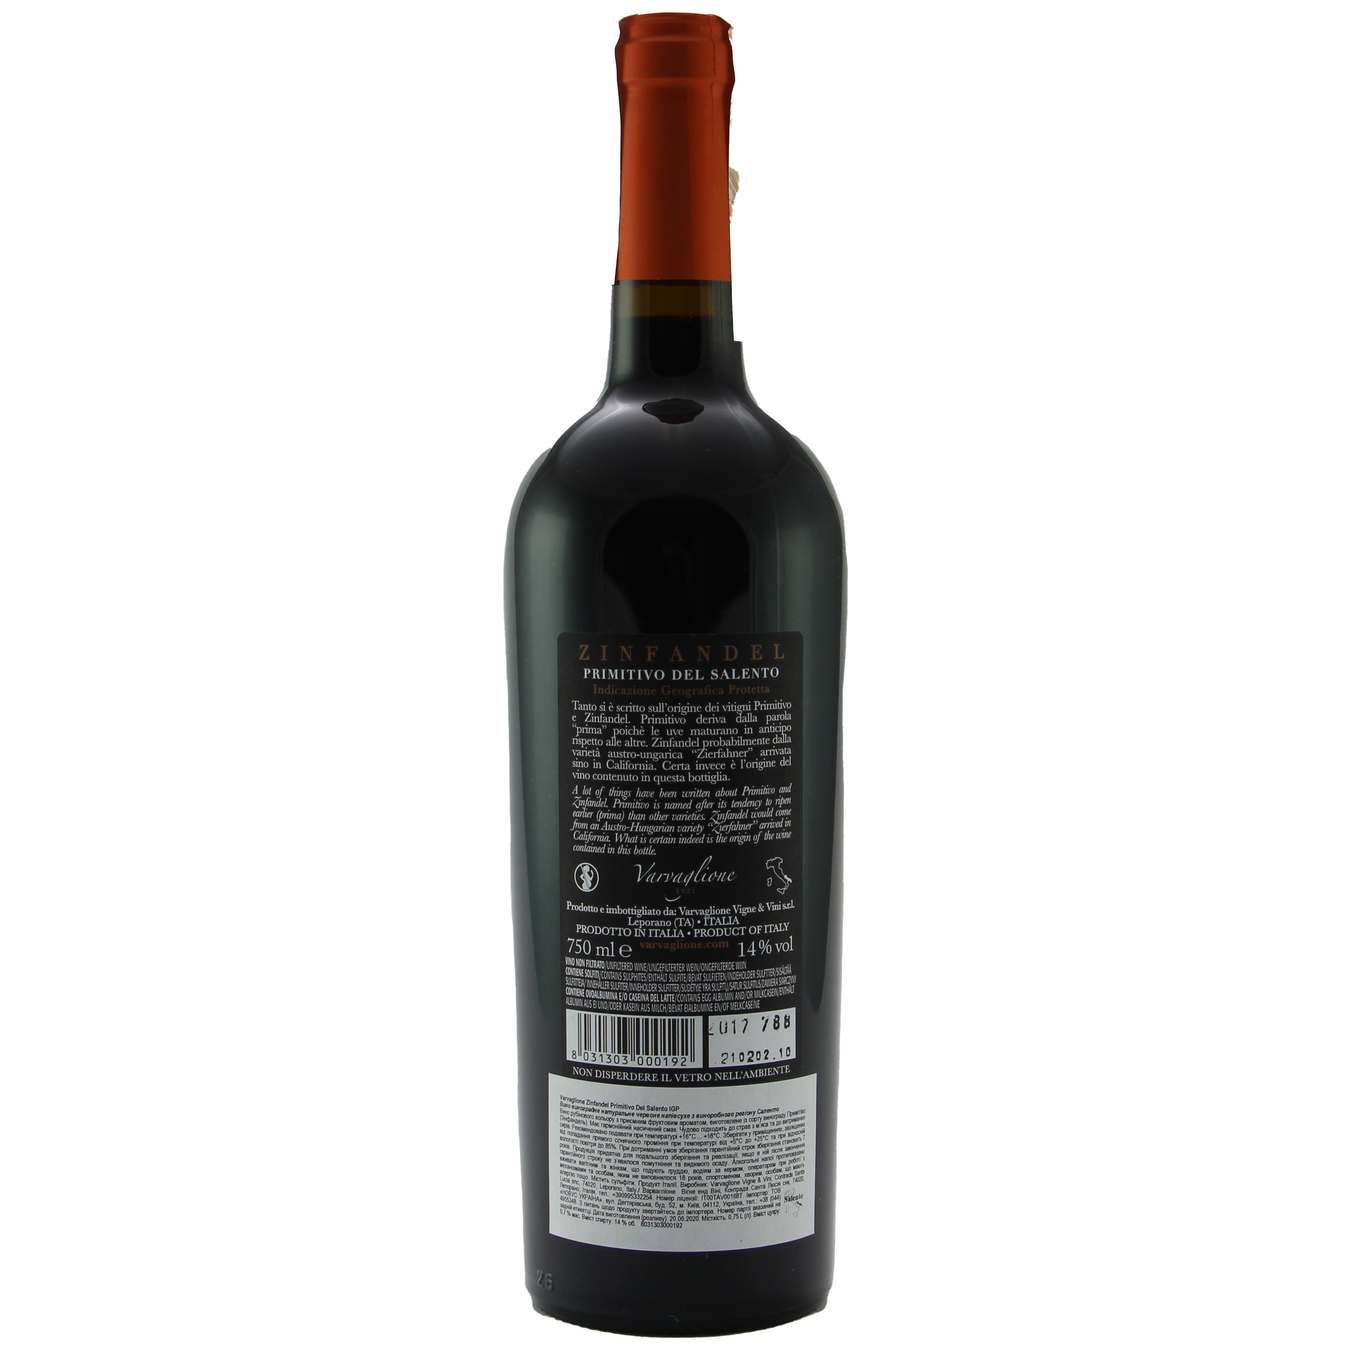 Varvaglione Zinfandel Primitivo del Salento IGP red semi-sweet wine 14% 0,75l 2